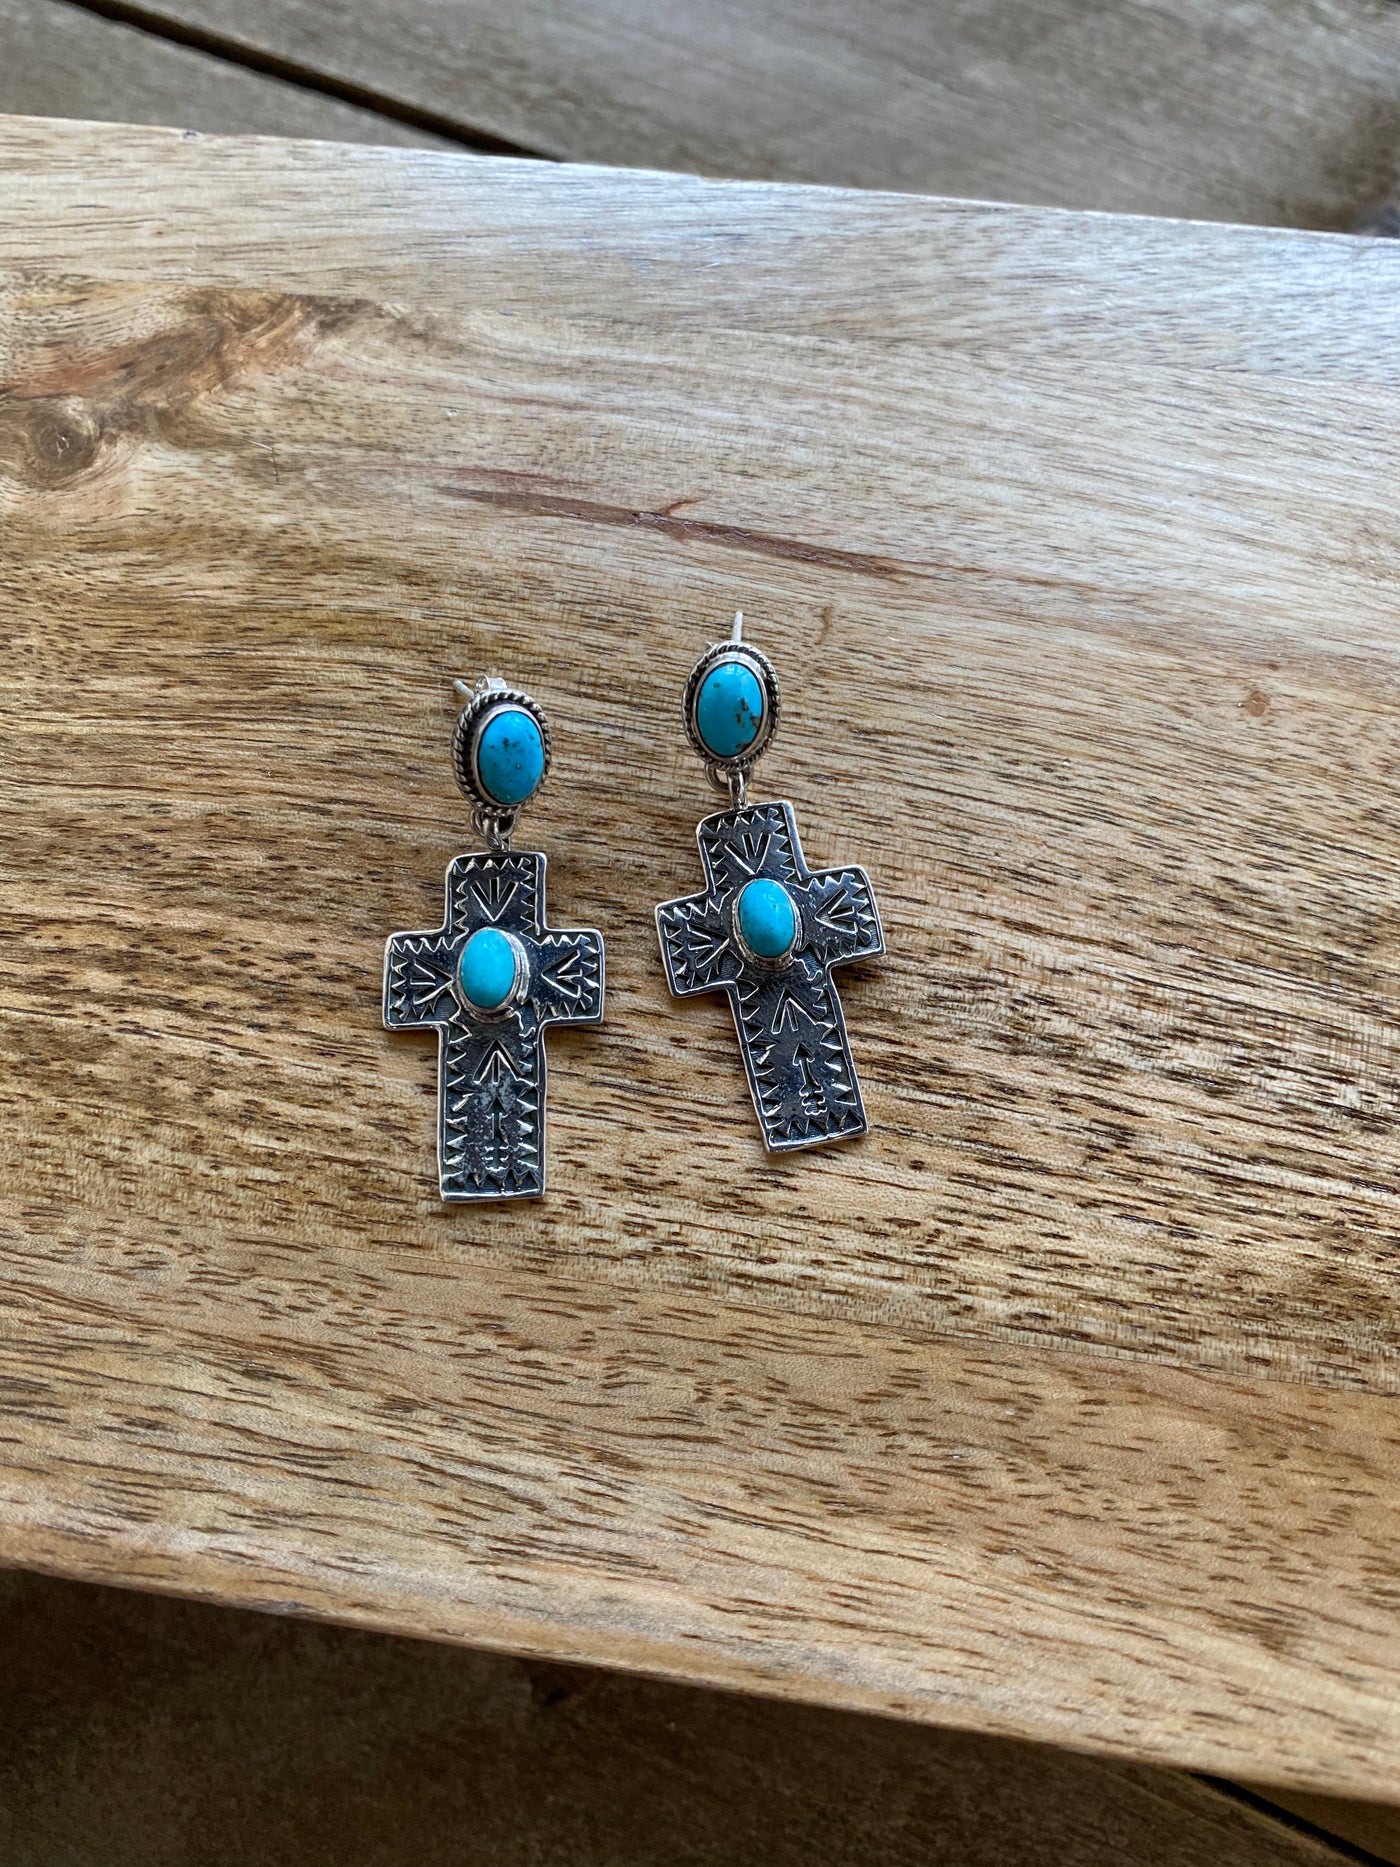 The Nolana Blue Kingman Turquoise Cross Earrings